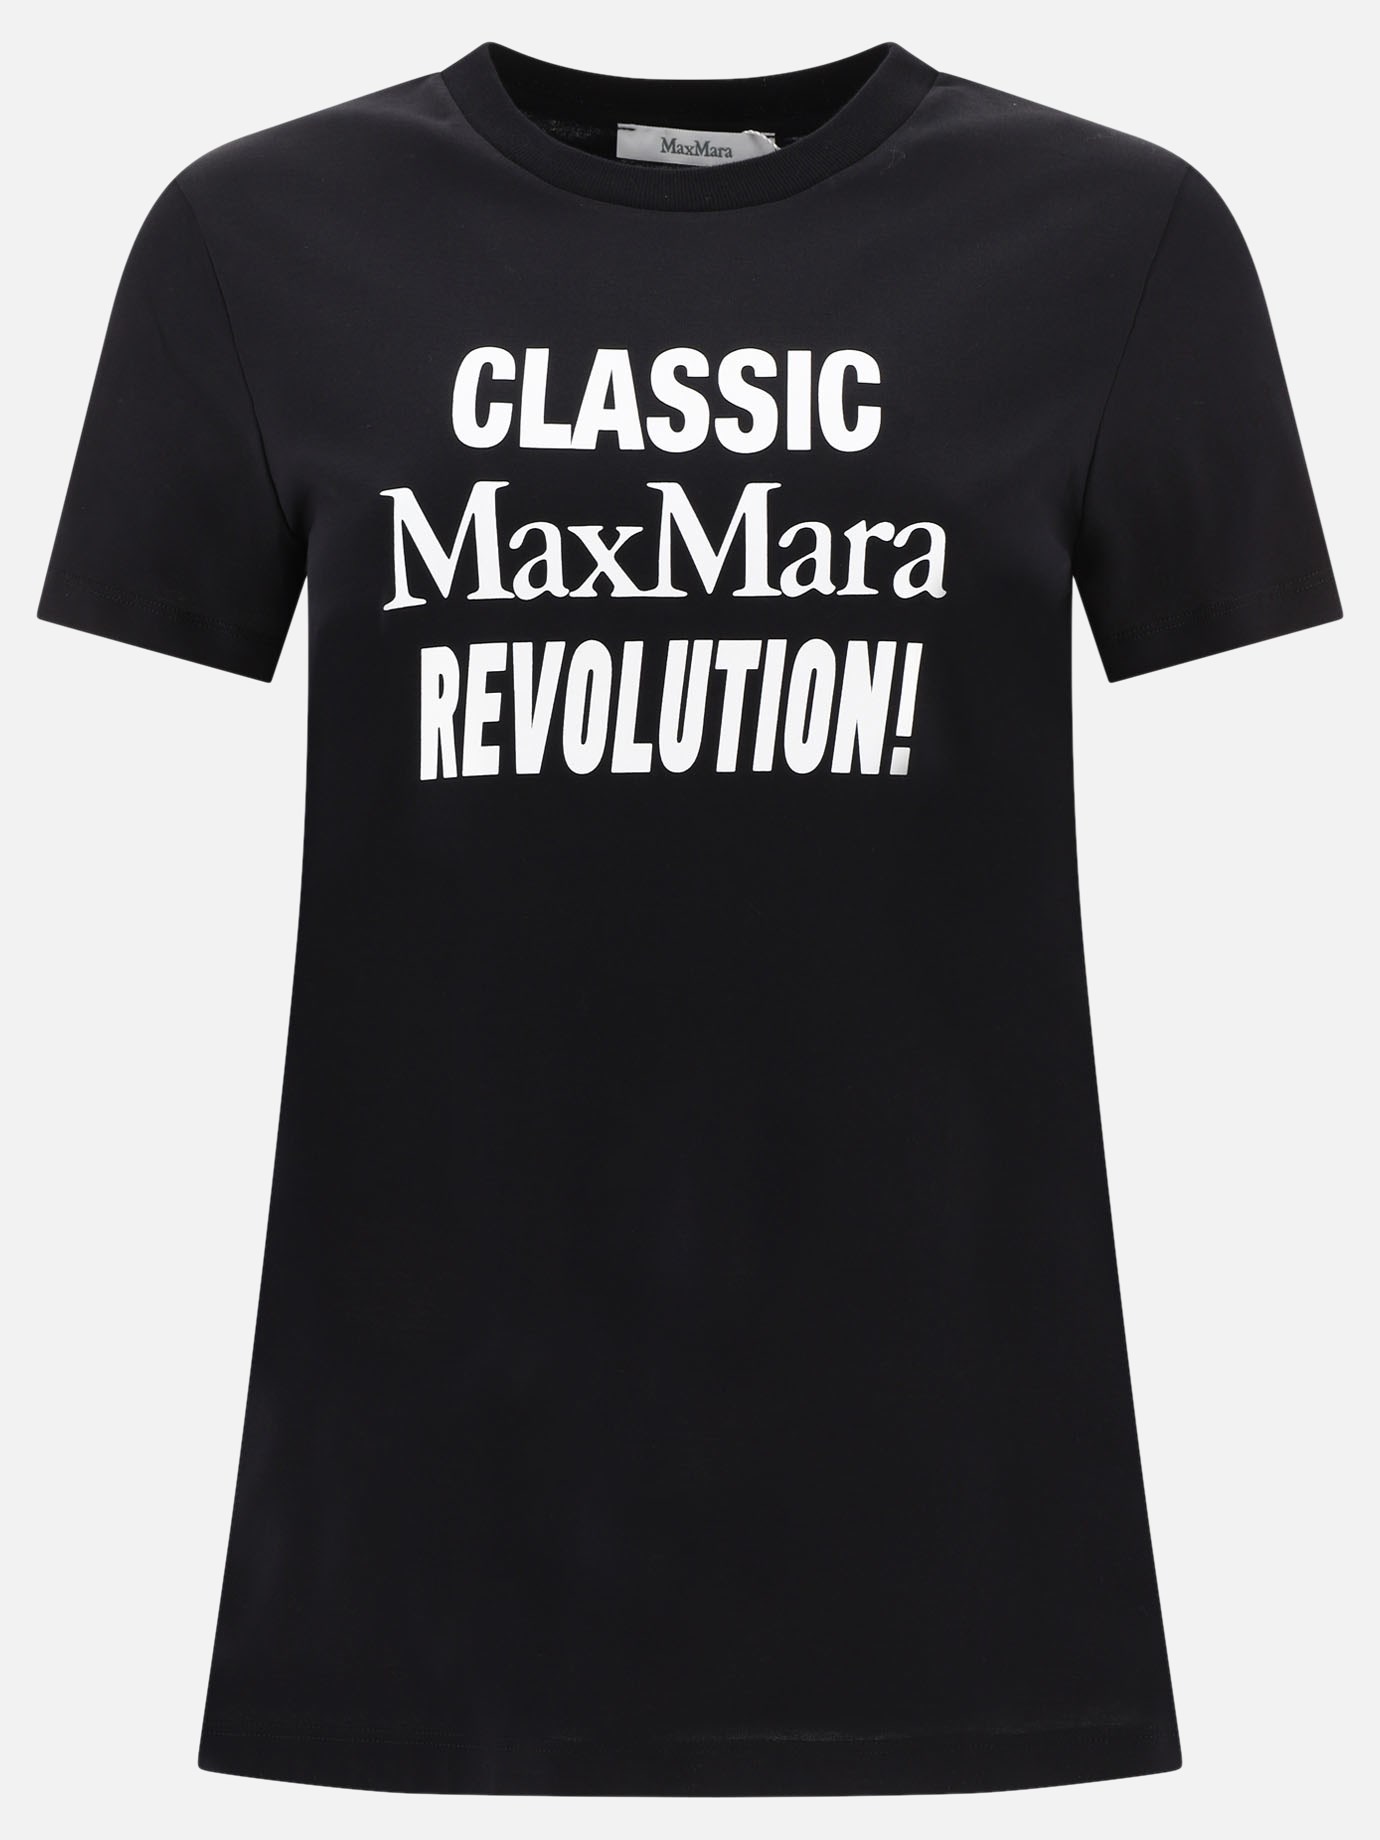  Gerard  t-shirtby Max Mara - 4